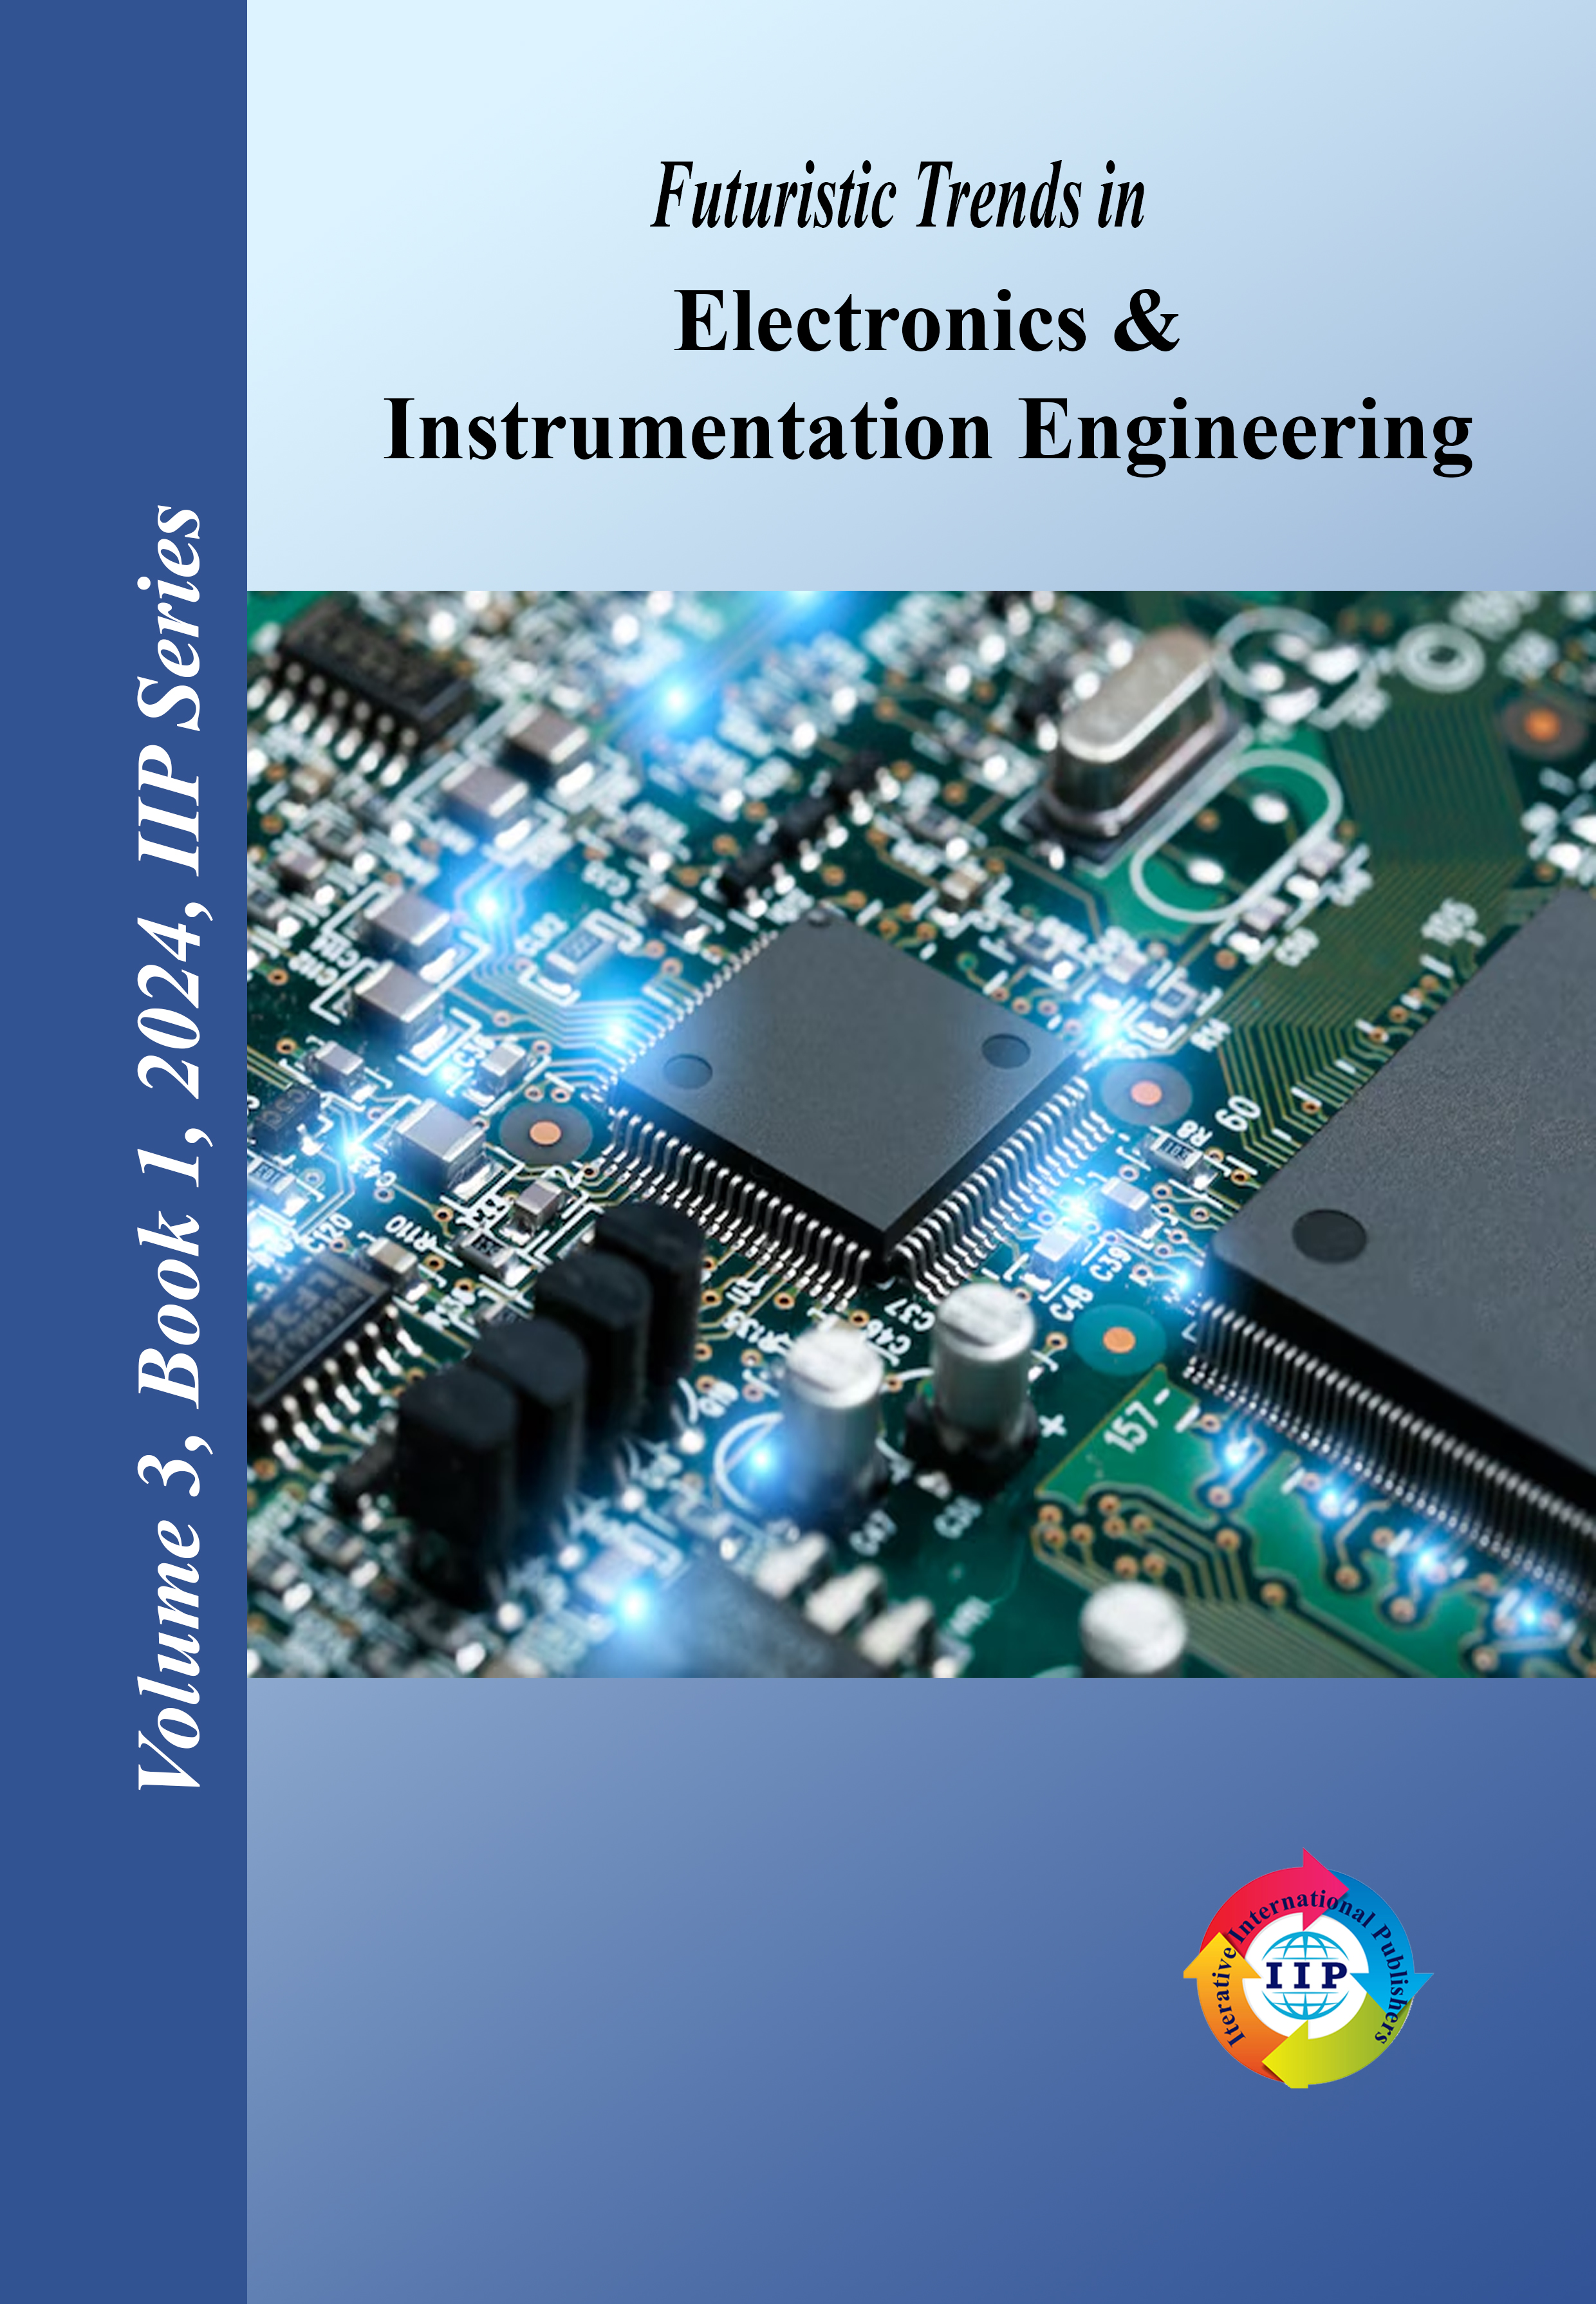 Futuristic Trends in Electronics & Instrumentation Engineering Volume 3 Book 1